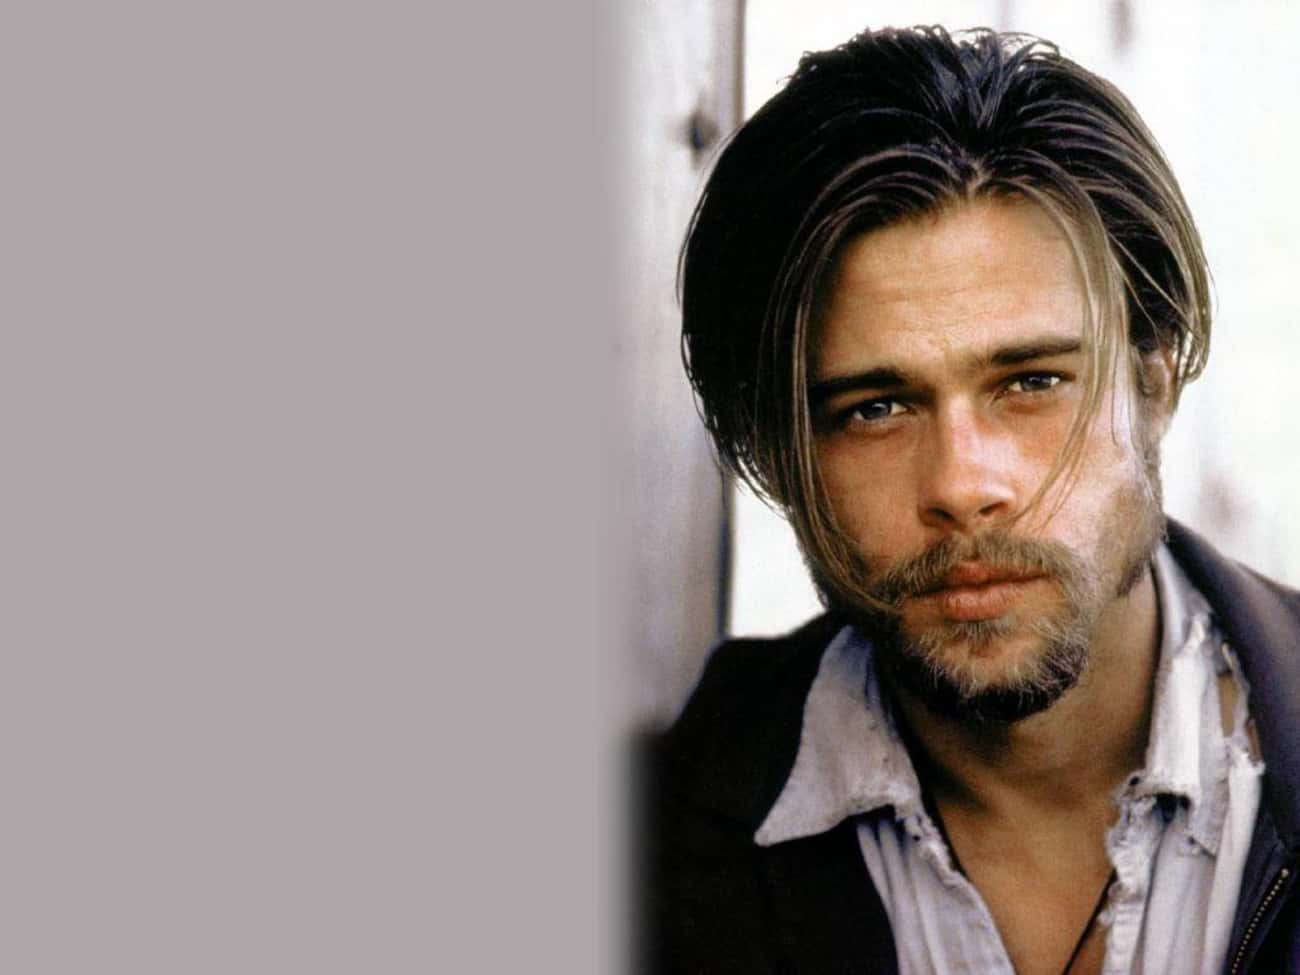 Brad Pitt's Take On the "Rachel" Haircut